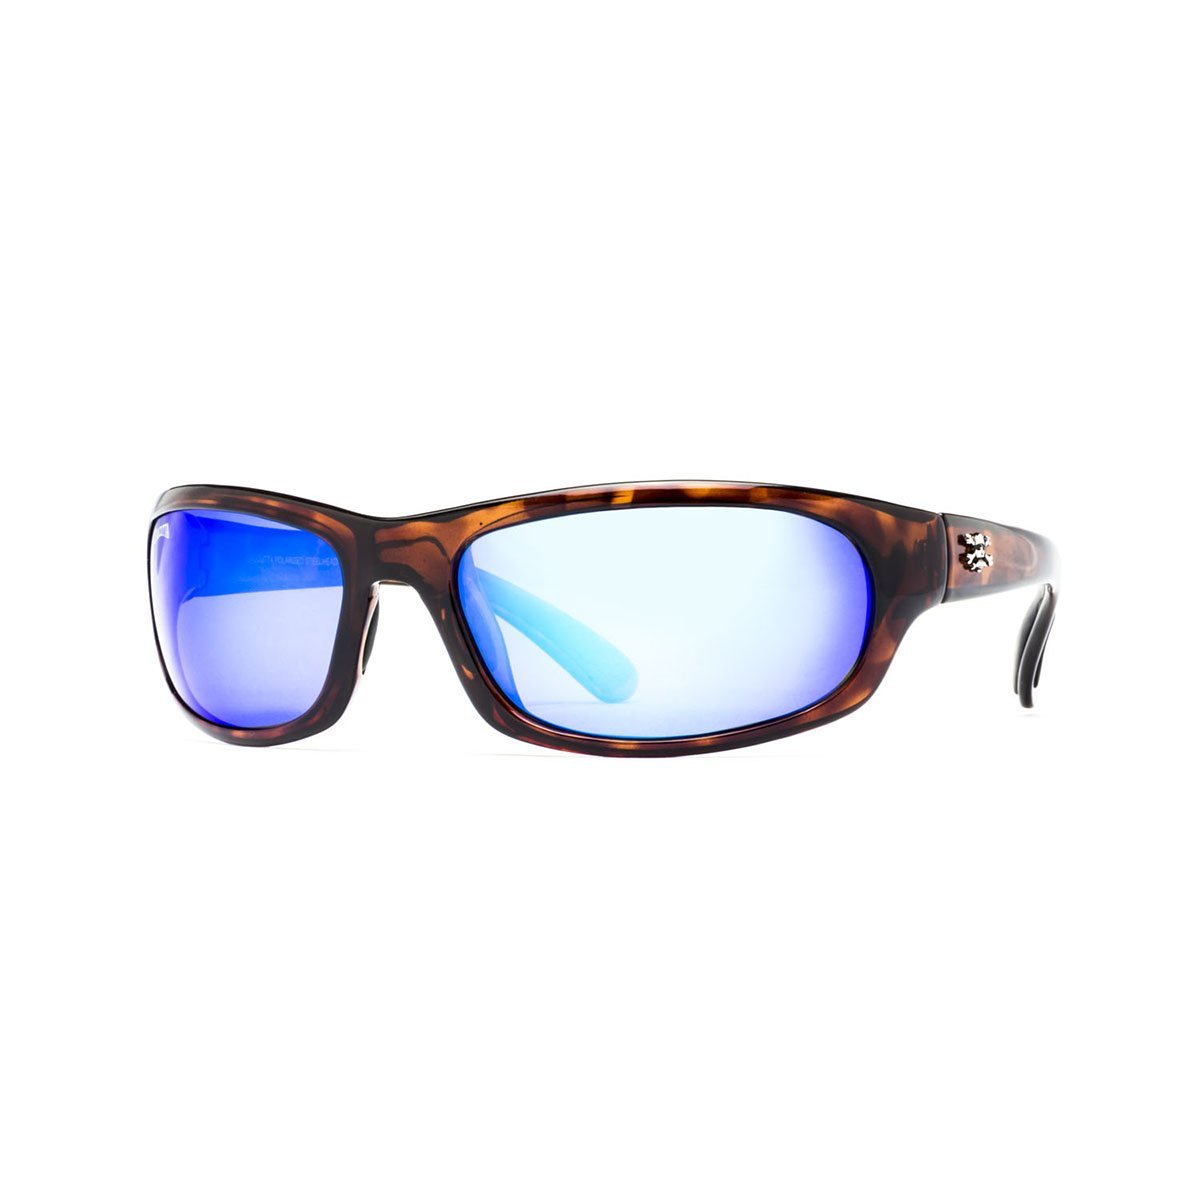 Calcutta Horseshoe Polarized Sunglasses Tortoise Frame/Blue Mirror Lens